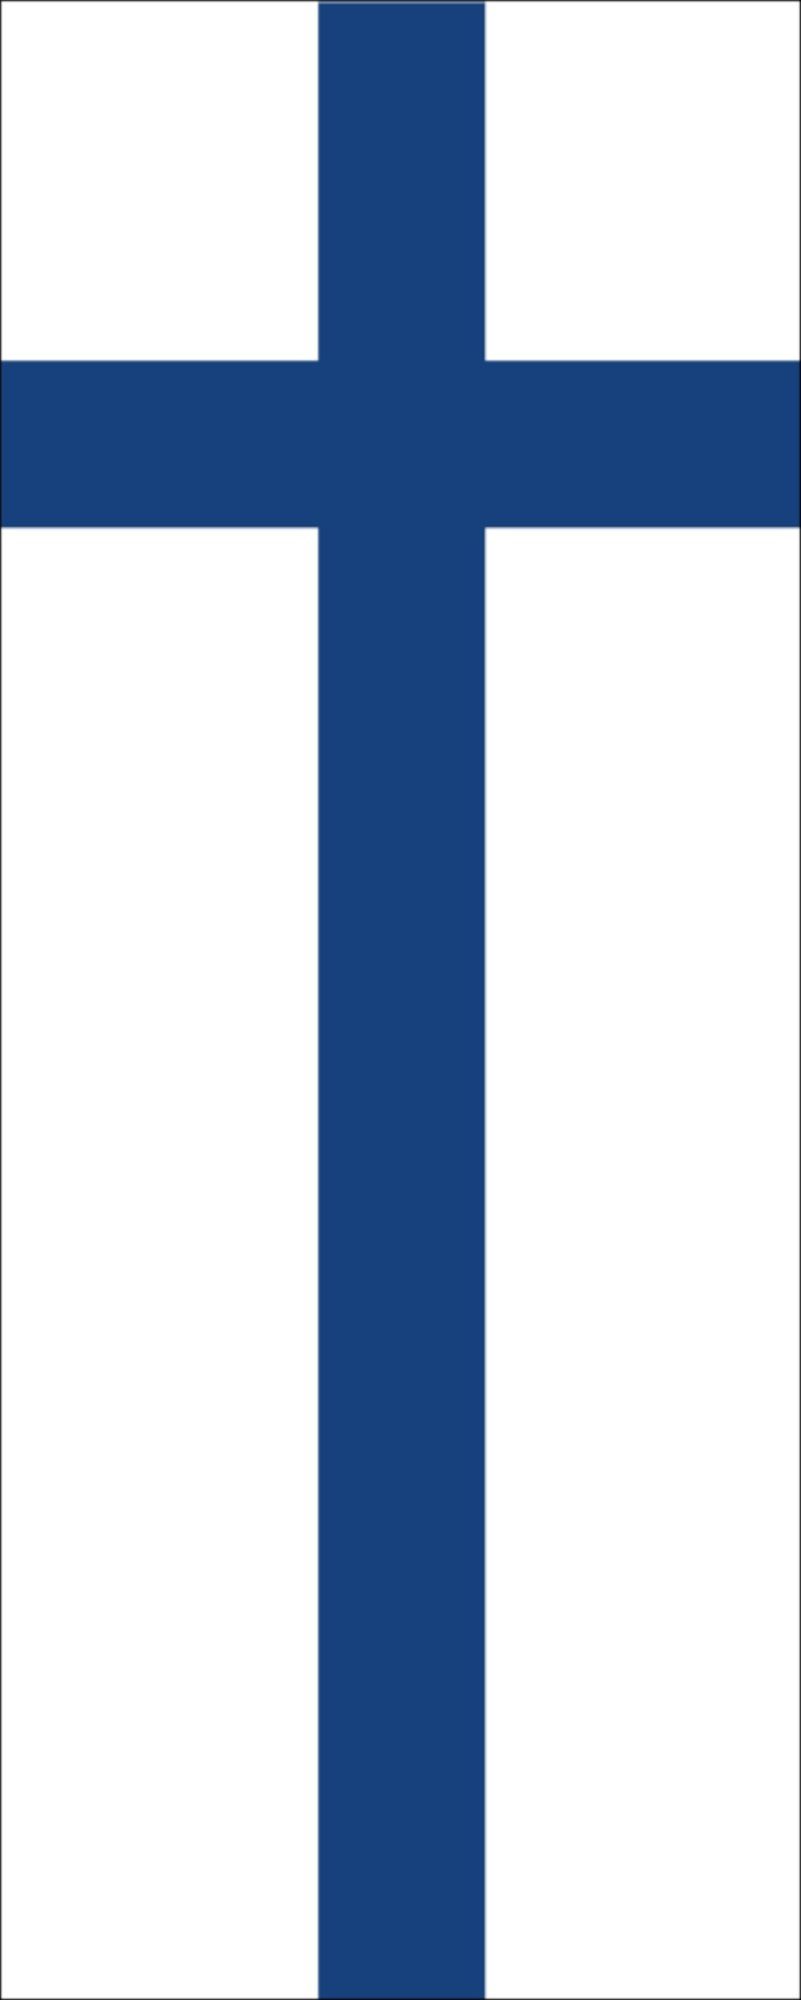 110 Flagge g/m² flaggenmeer Hochformat Flagge Finnland